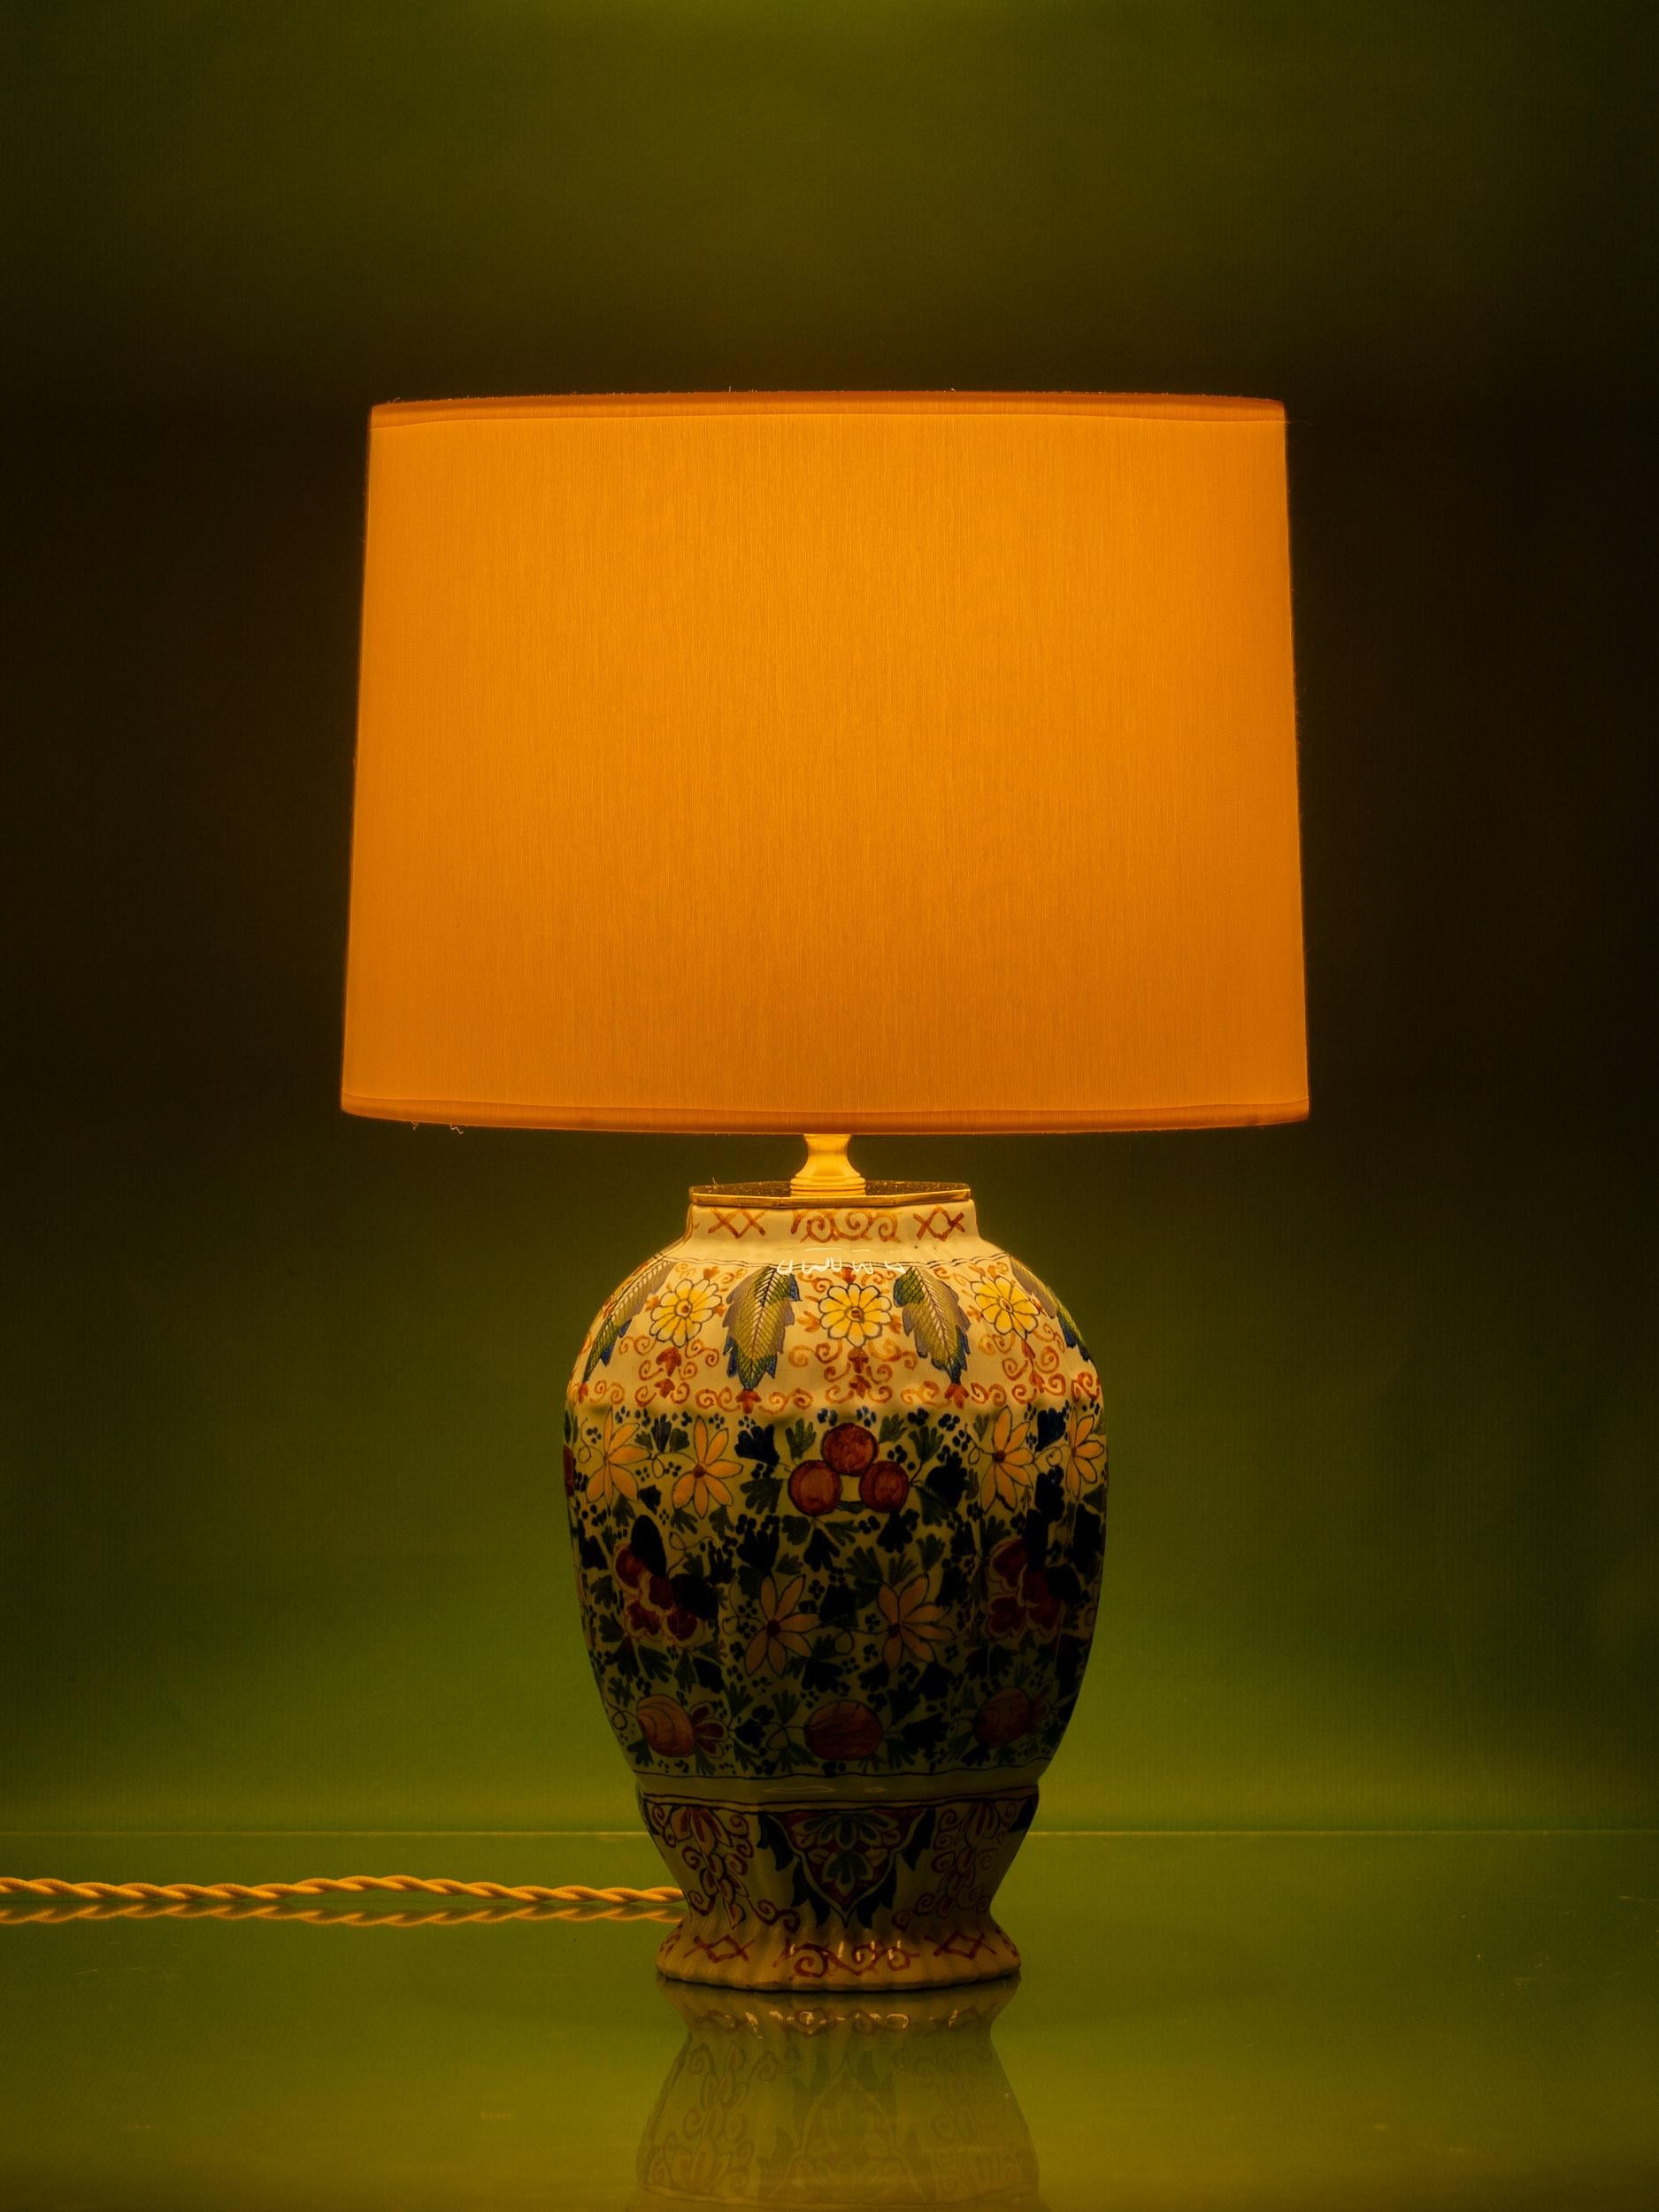 Royal Tichelaar Makkum Delft Vase Lamps, circa 1890, Yellow Linen Shades For Sale 7